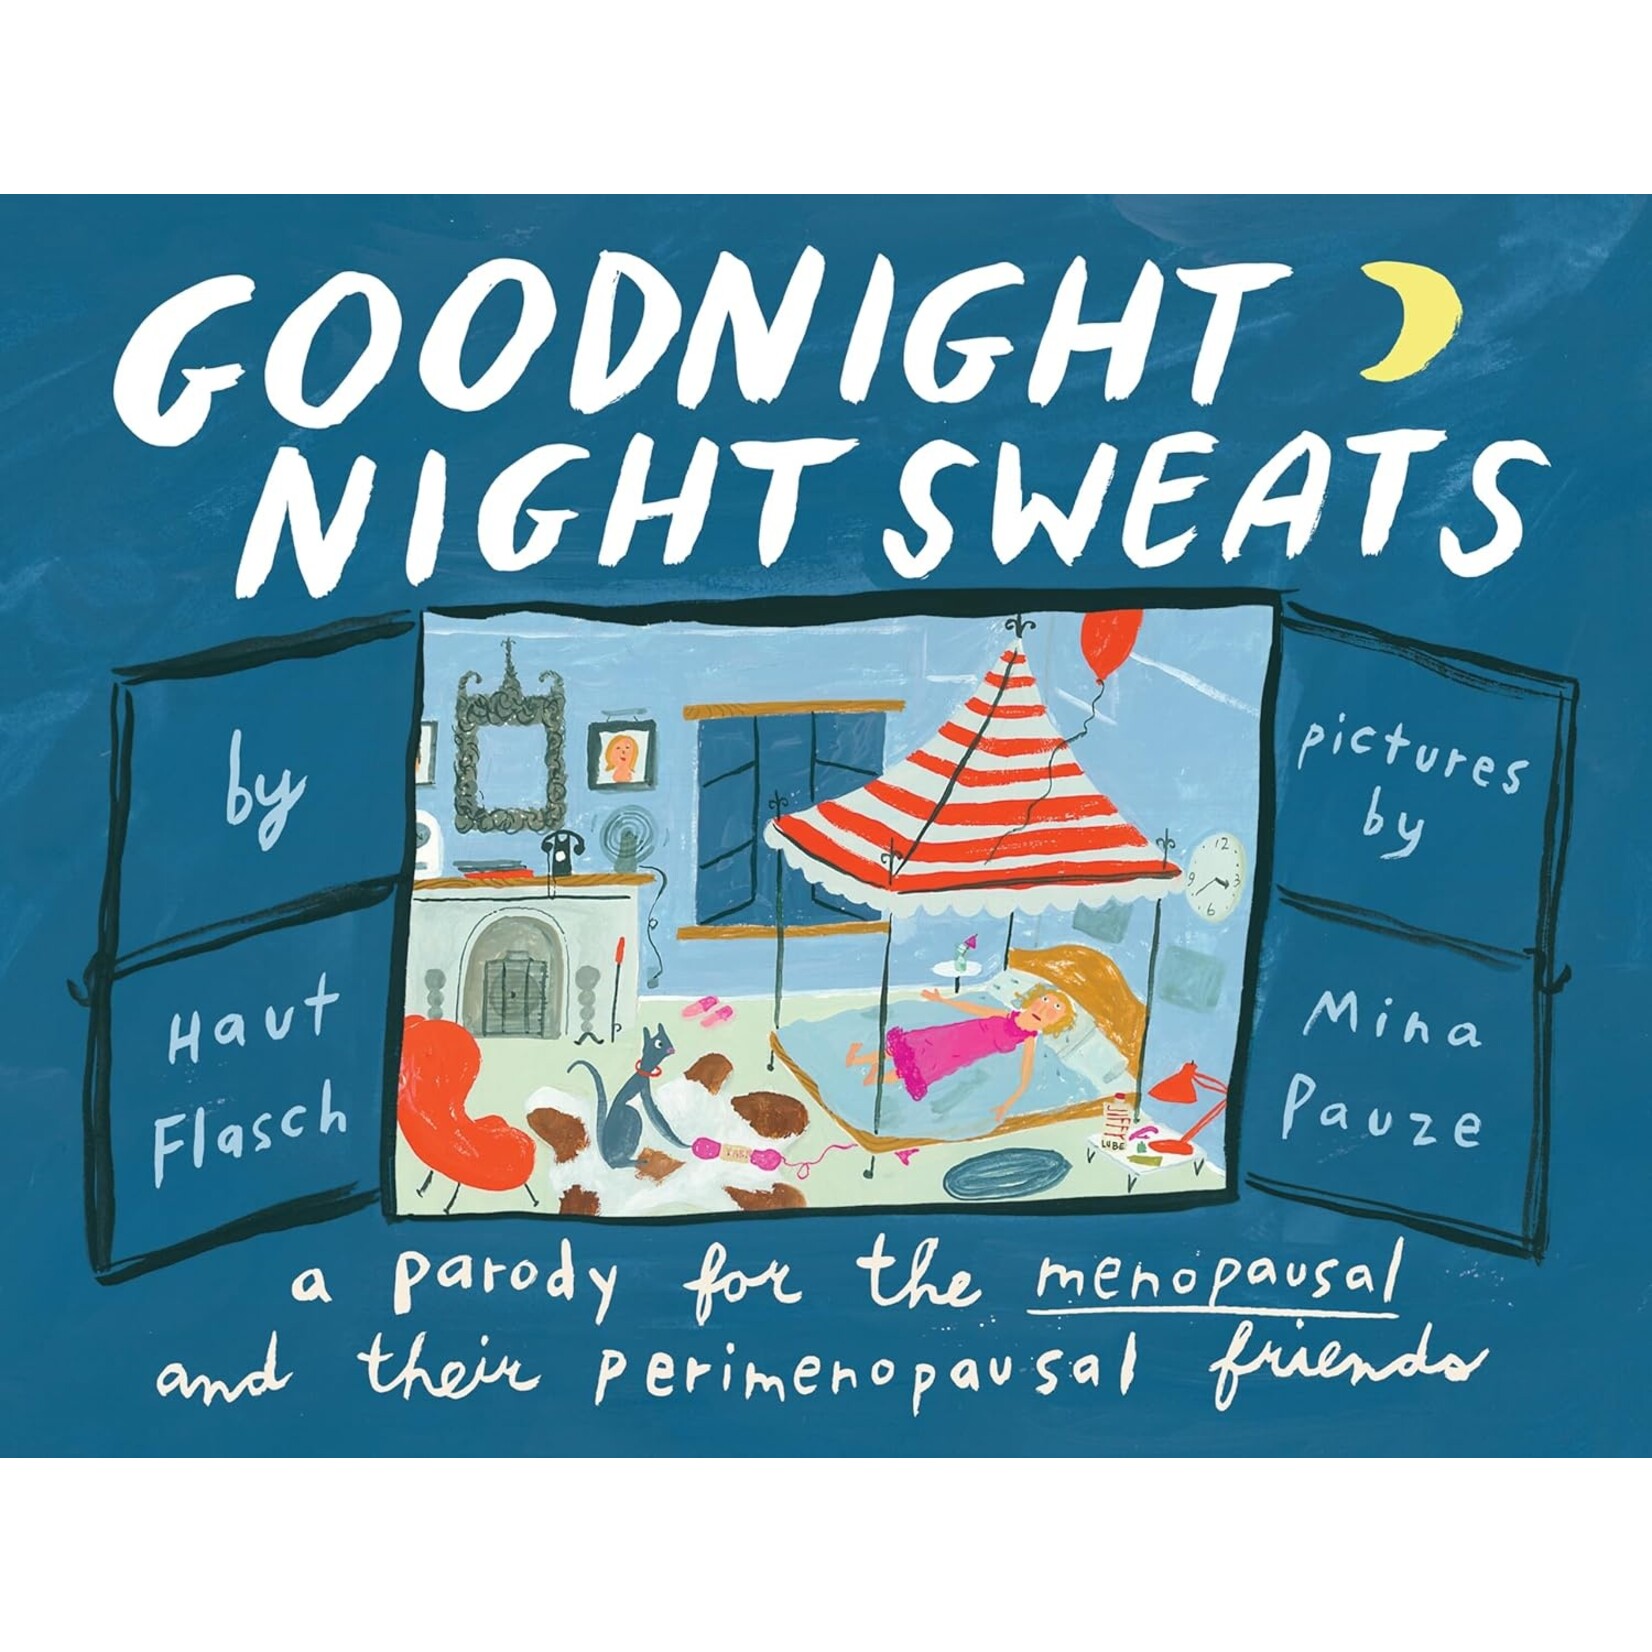 Ingram Publisher Services Goodnight Night Sweats